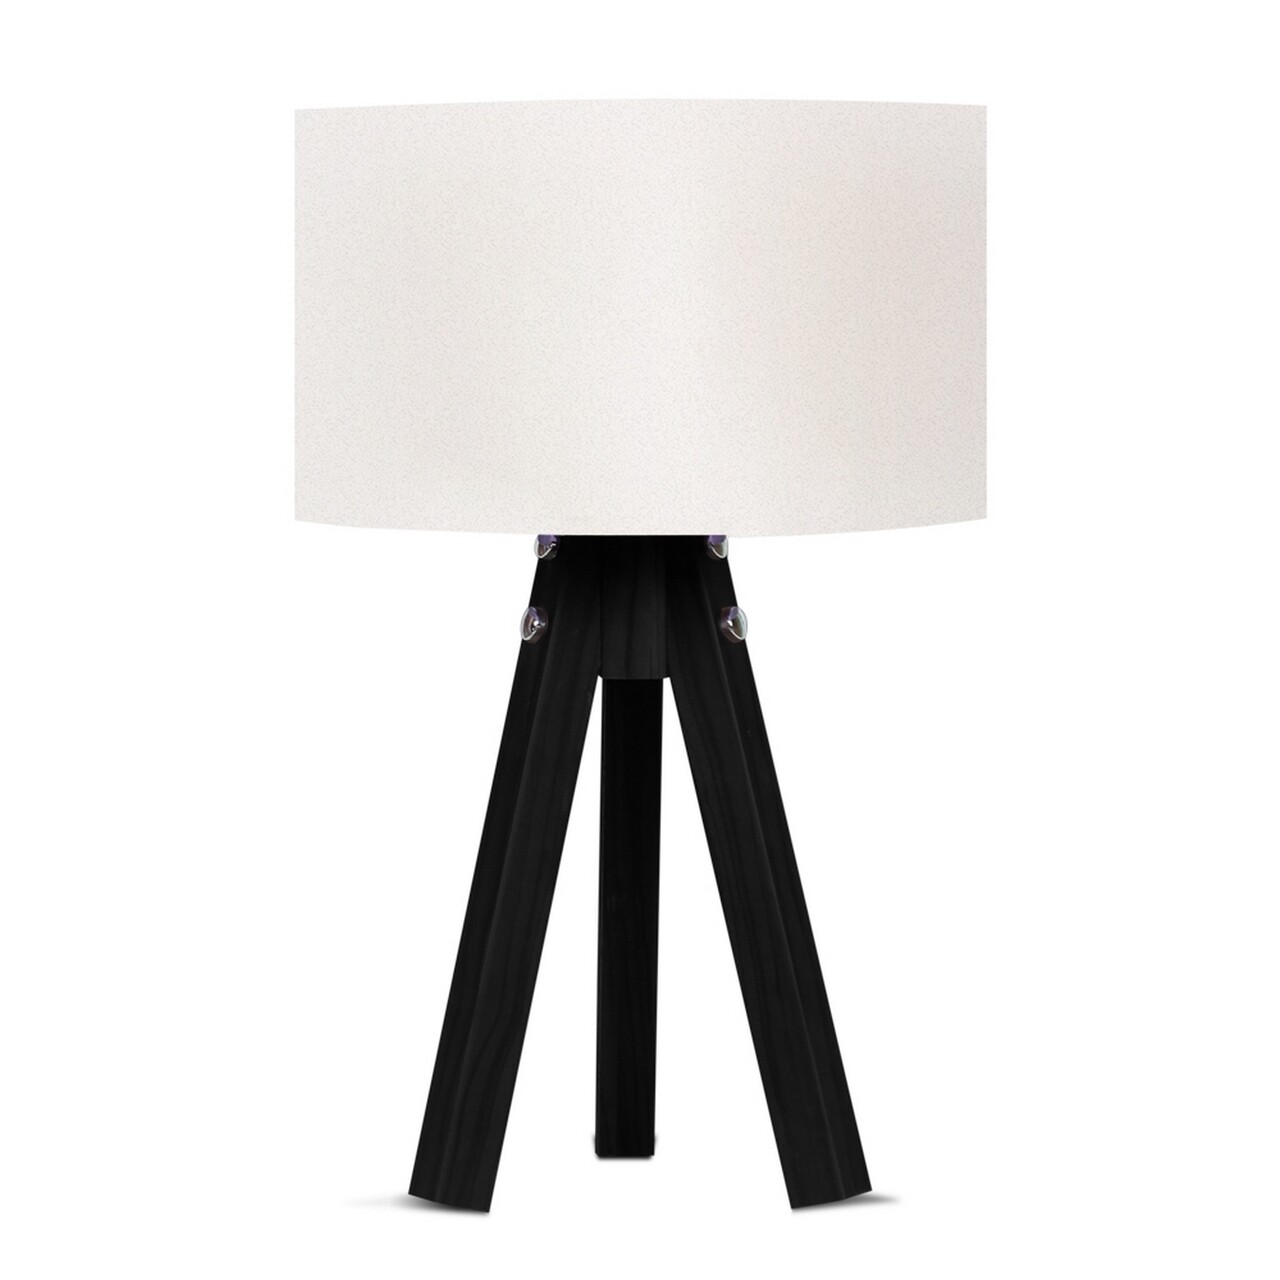 Yok Lámpa, 44378, Squid Lighting, 45x25x25 cm, 60W, fehér/fekete